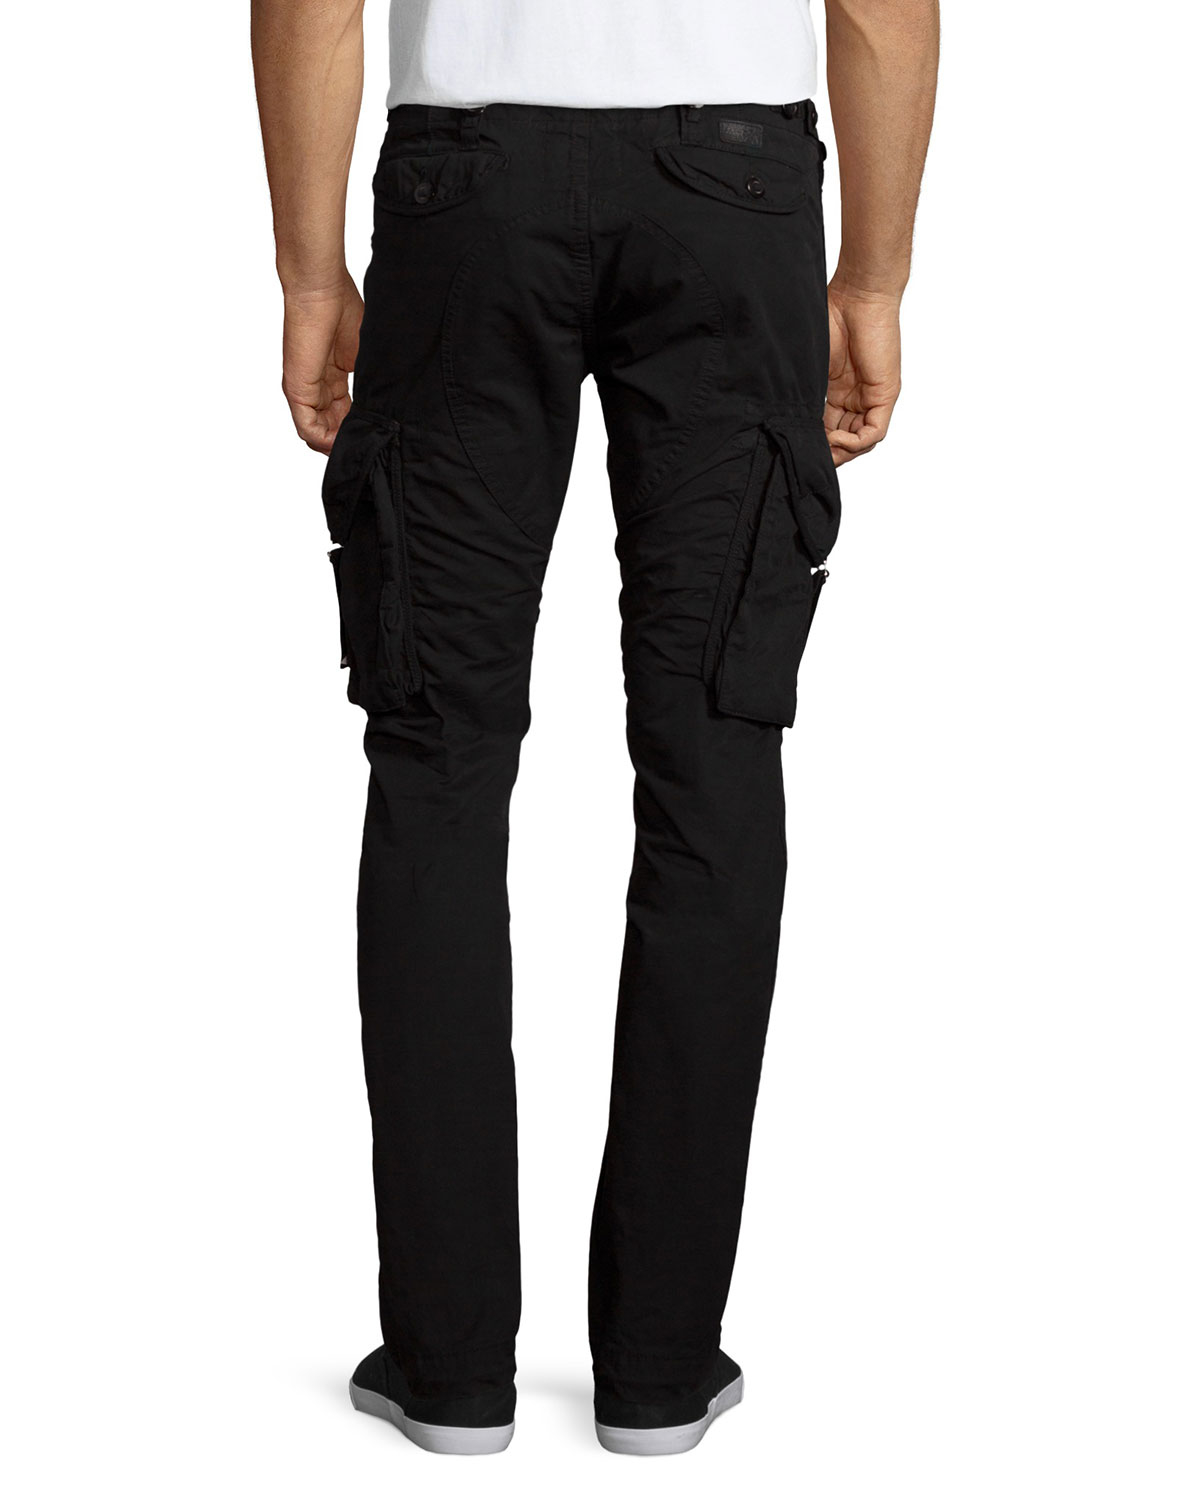 Lyst - Prps Slim-fit Twill Cargo Pants in Black for Men